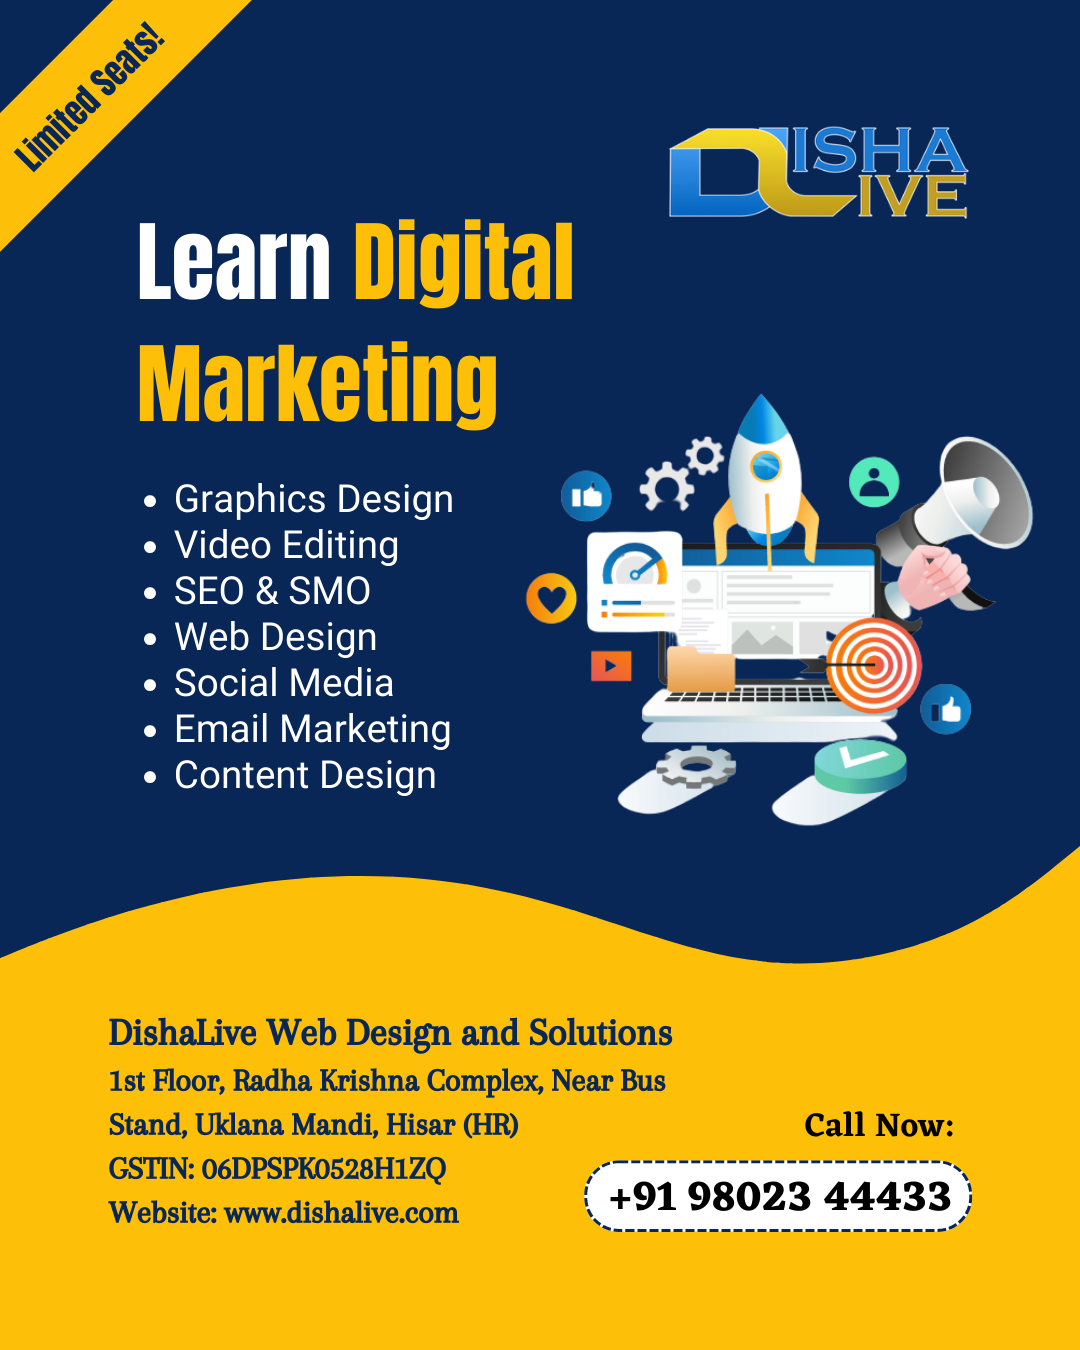 Learn Digital Marketing in Uklana Mandi Hisar